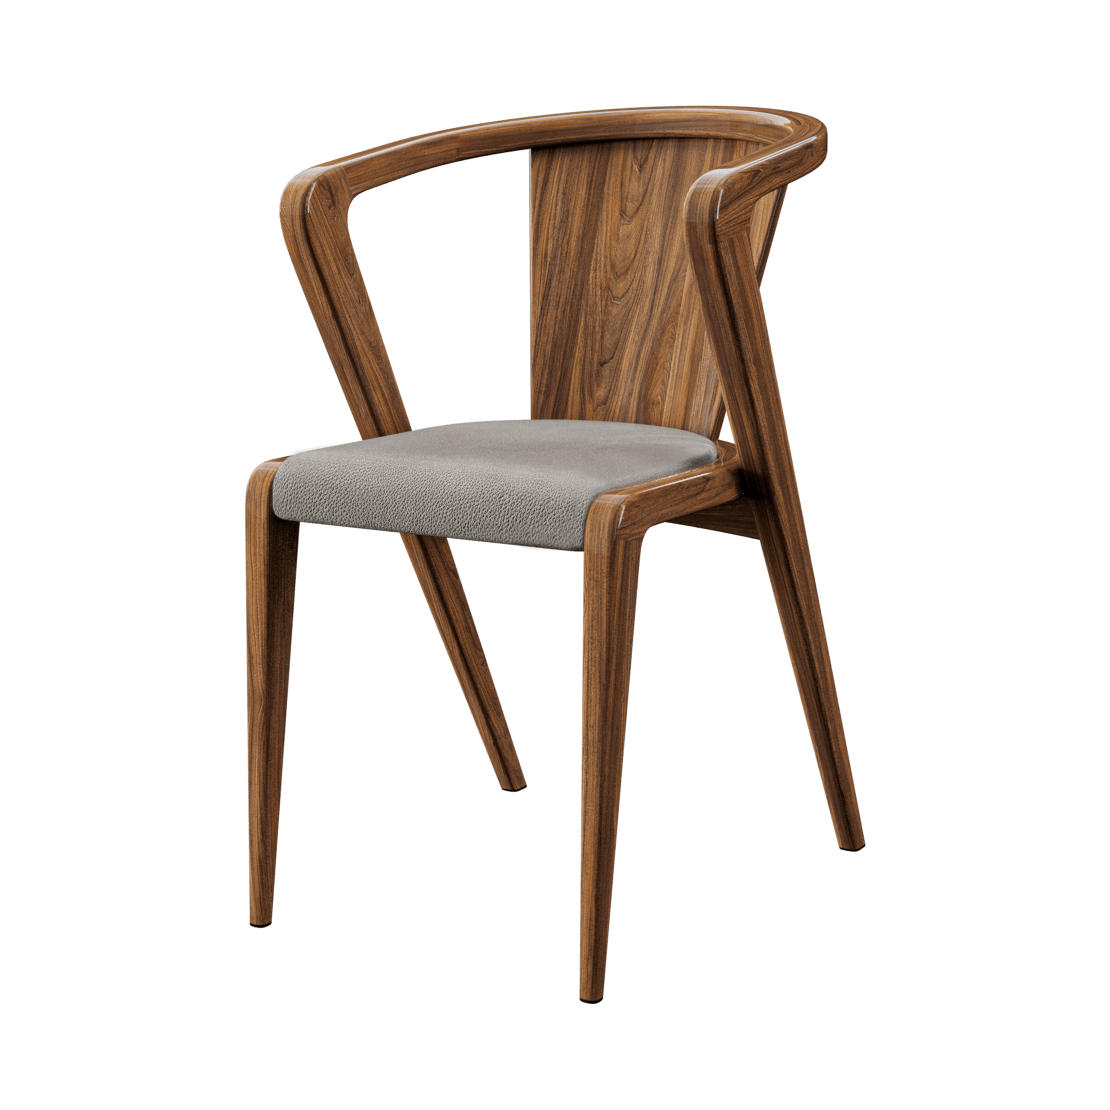 Chair Portuguese Roots - Download the 3D Model (25999) | zeelproject.com